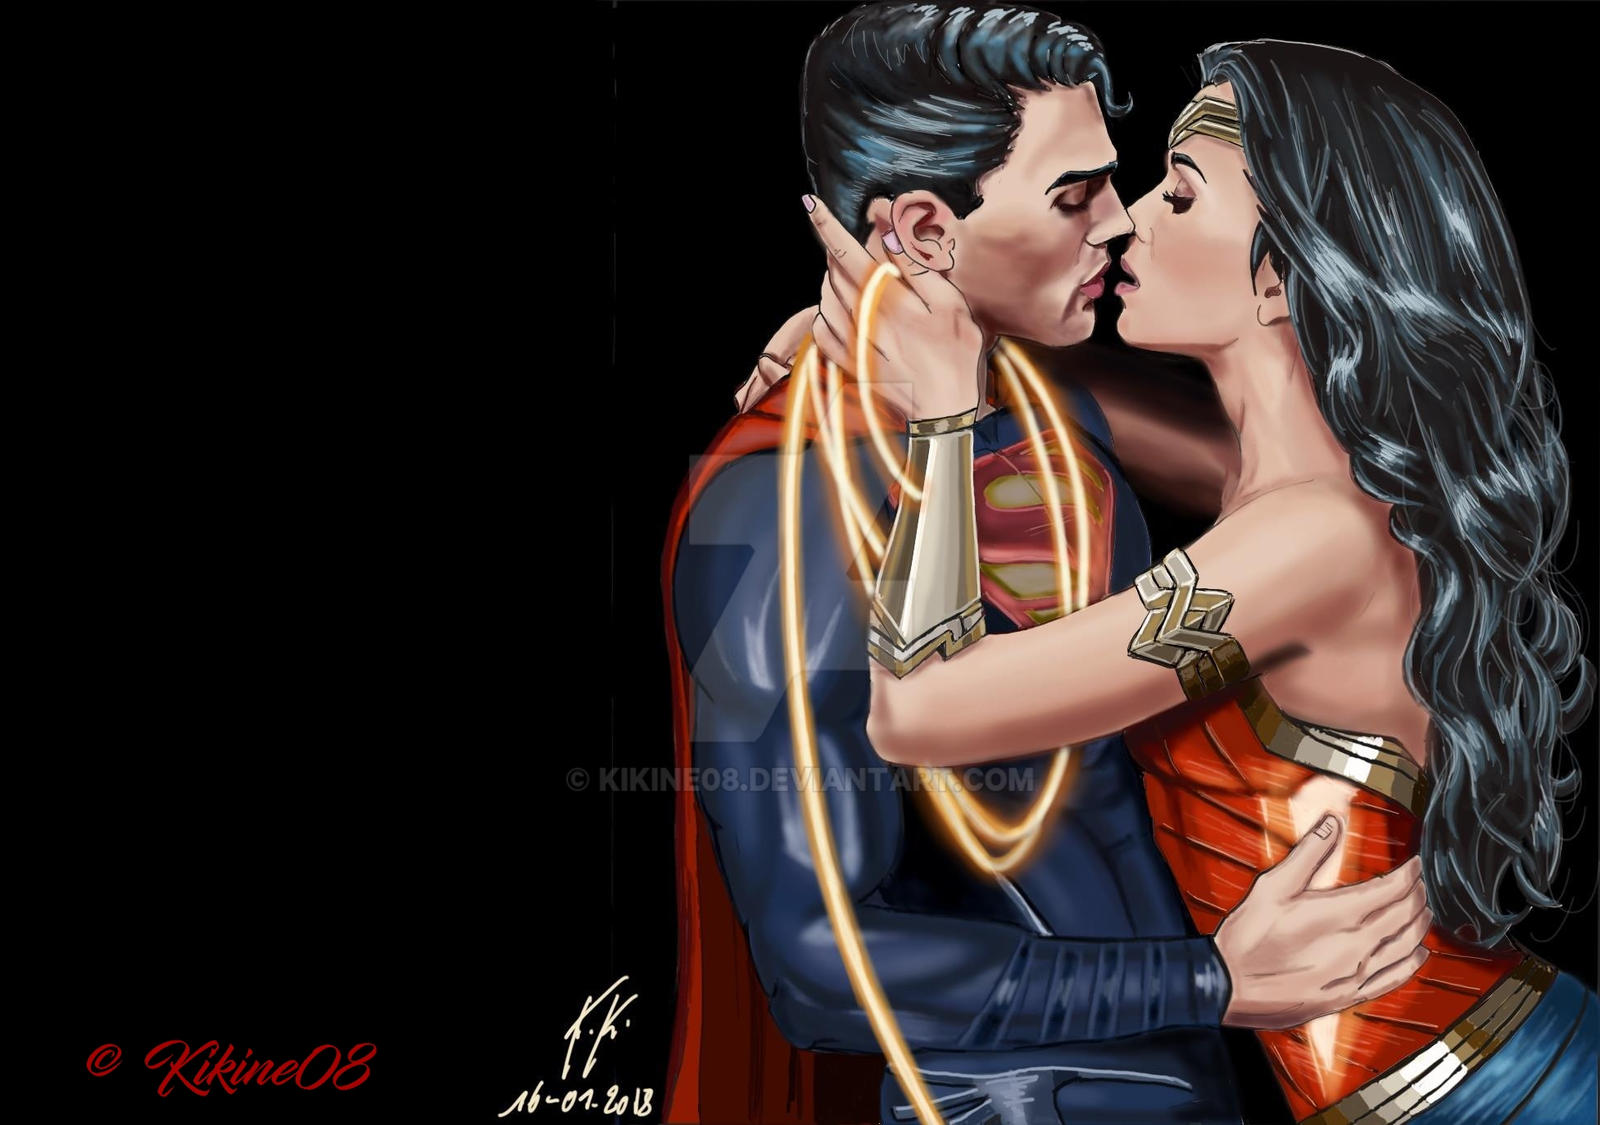 Loves wonder superman woman Wonder Woman: